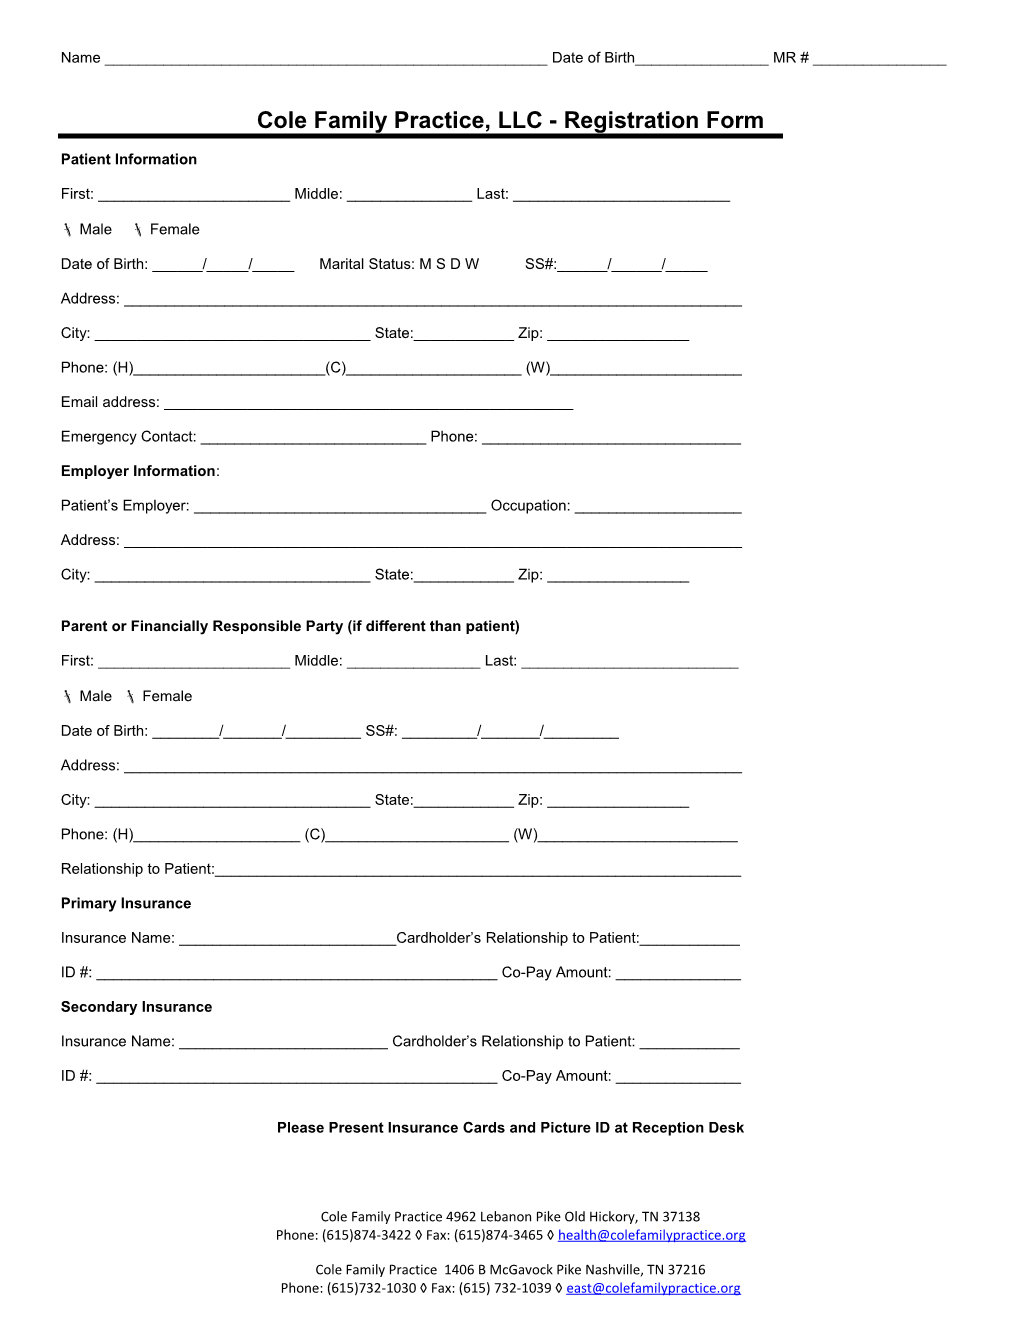 Cole Family Practice, LLC - Registration Form